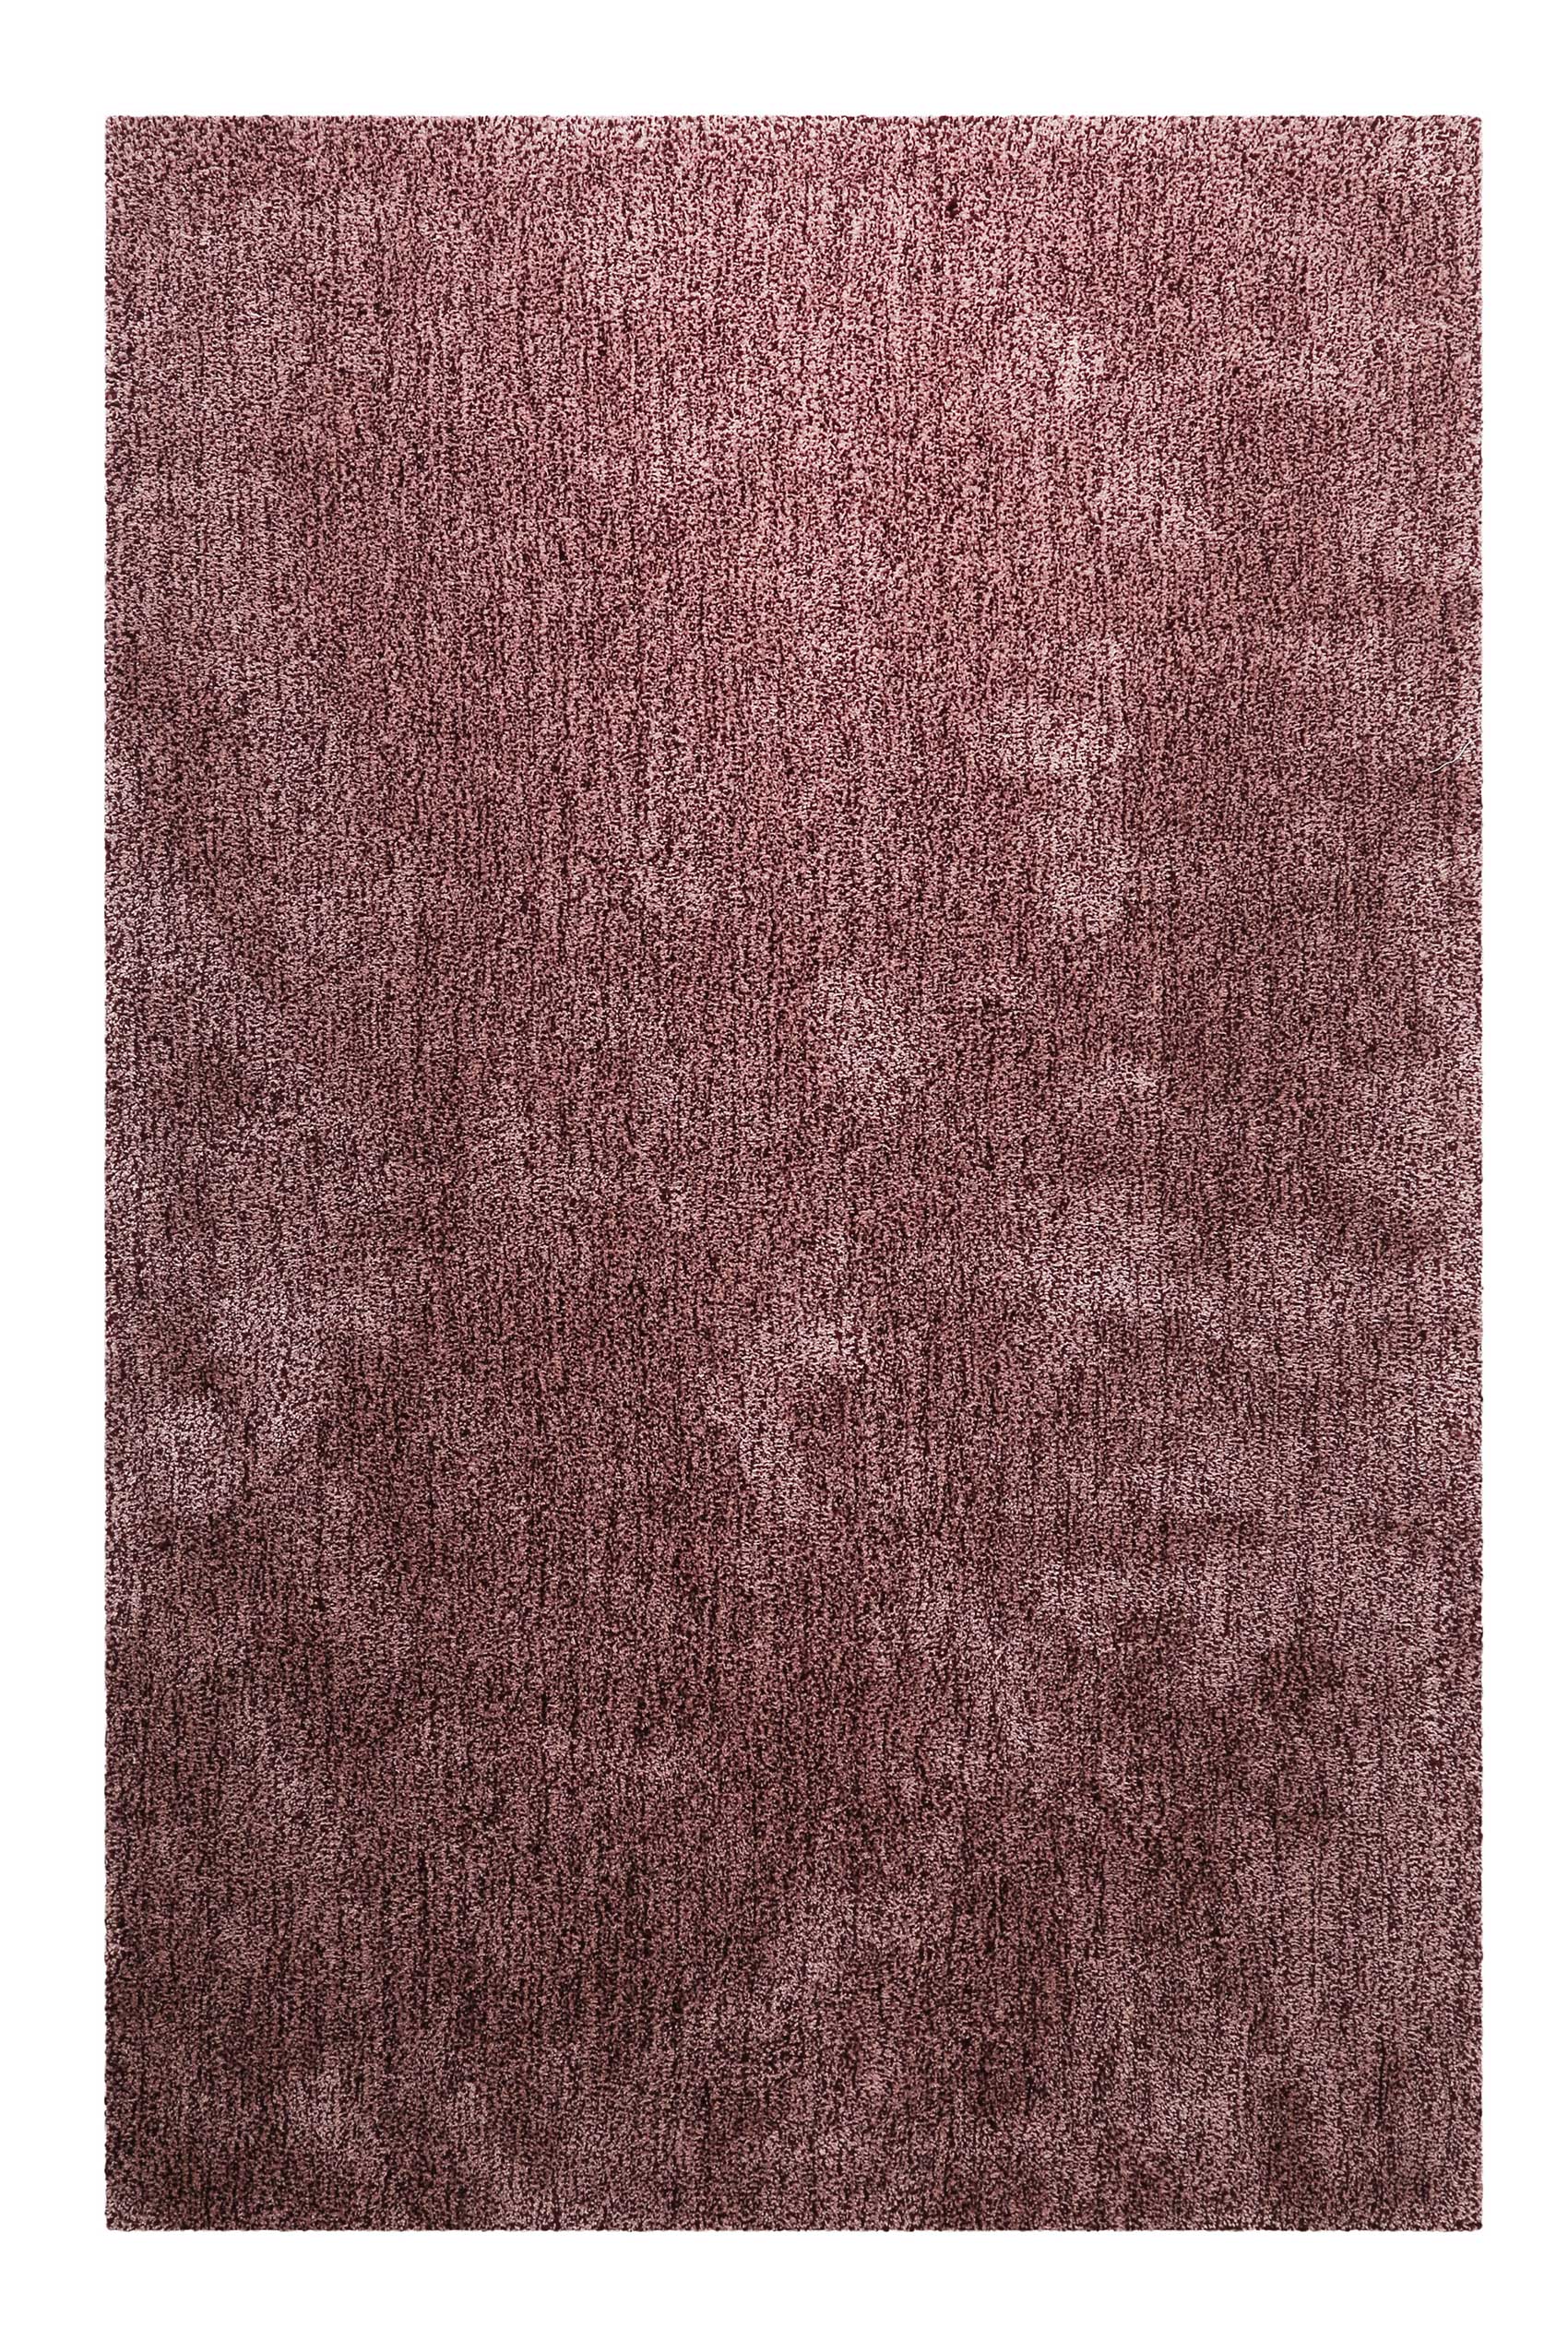 Teppich Violett Rosa meliert Hochflor » Pisa « Homie Living - Ansicht 1